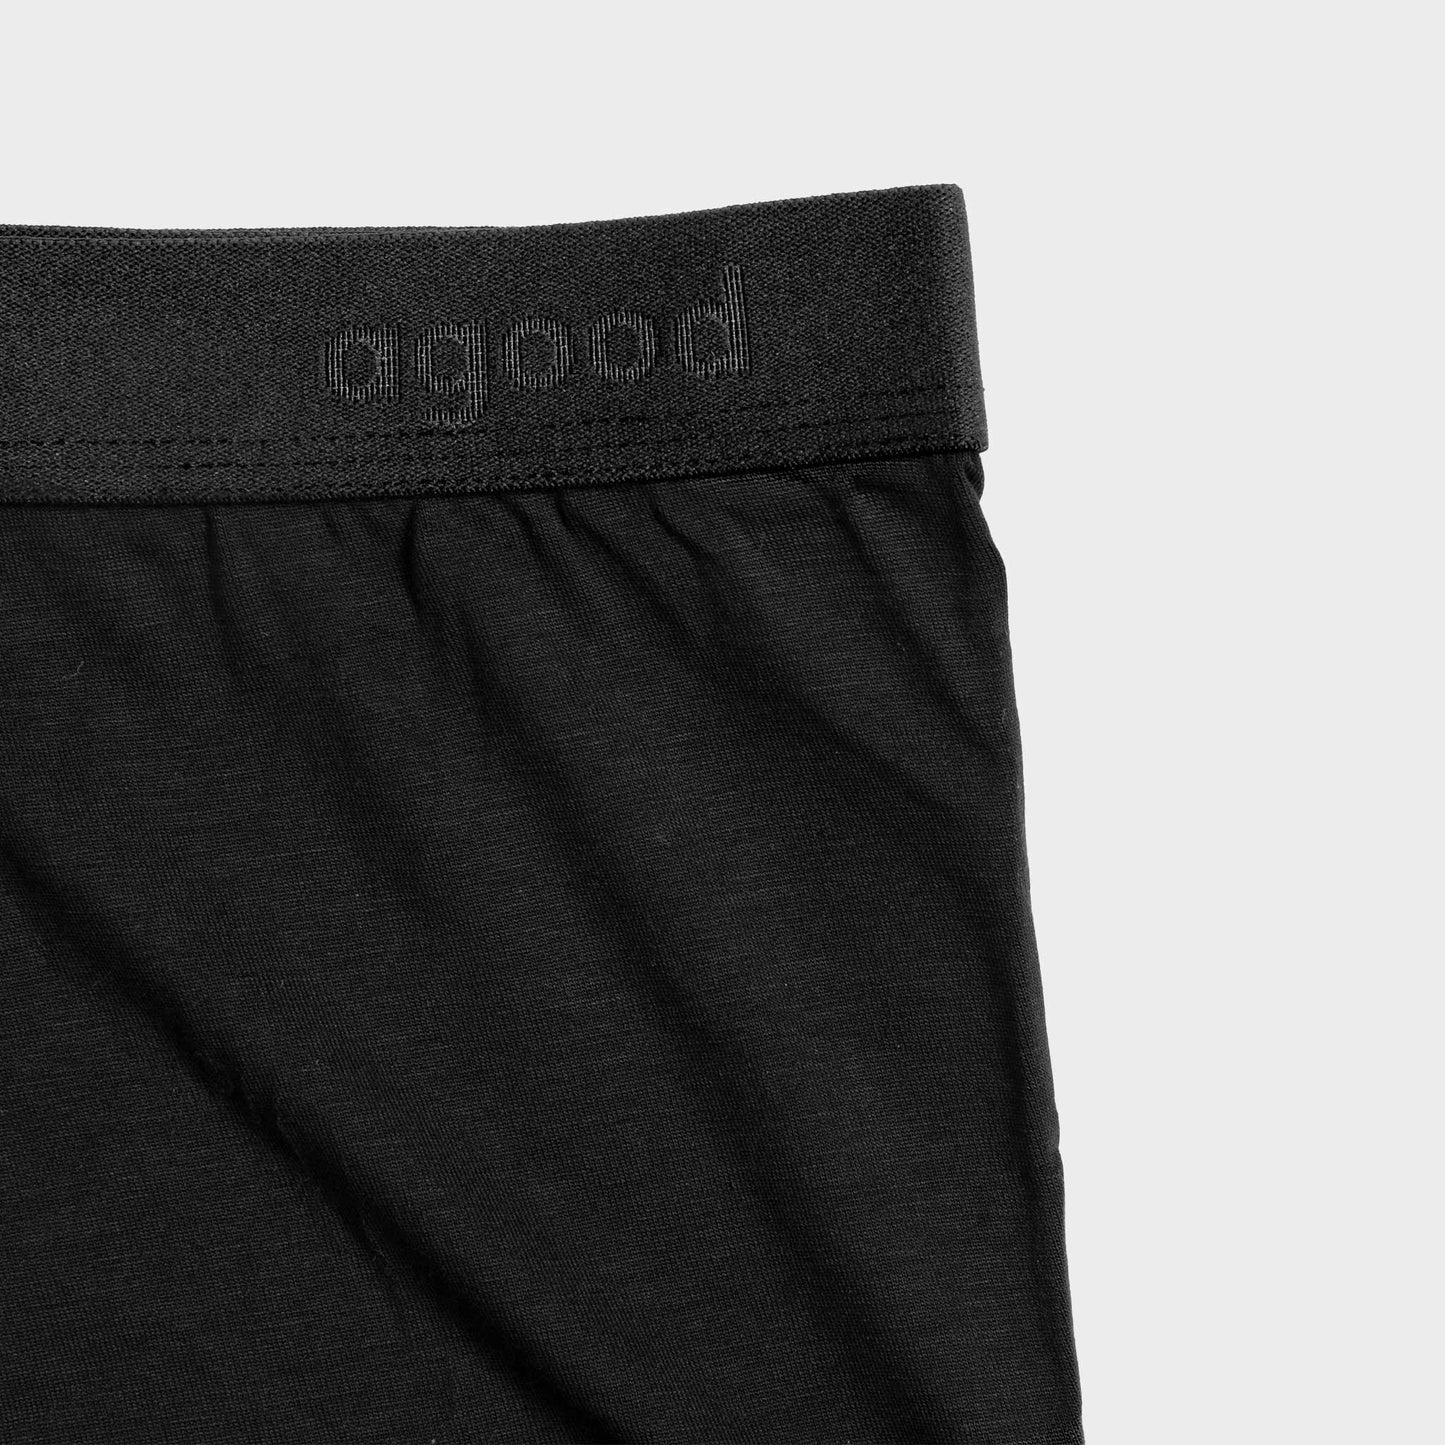 TENCEL™ Lyocell Boxer Brief Underwear for Men I 2-Pack, Black